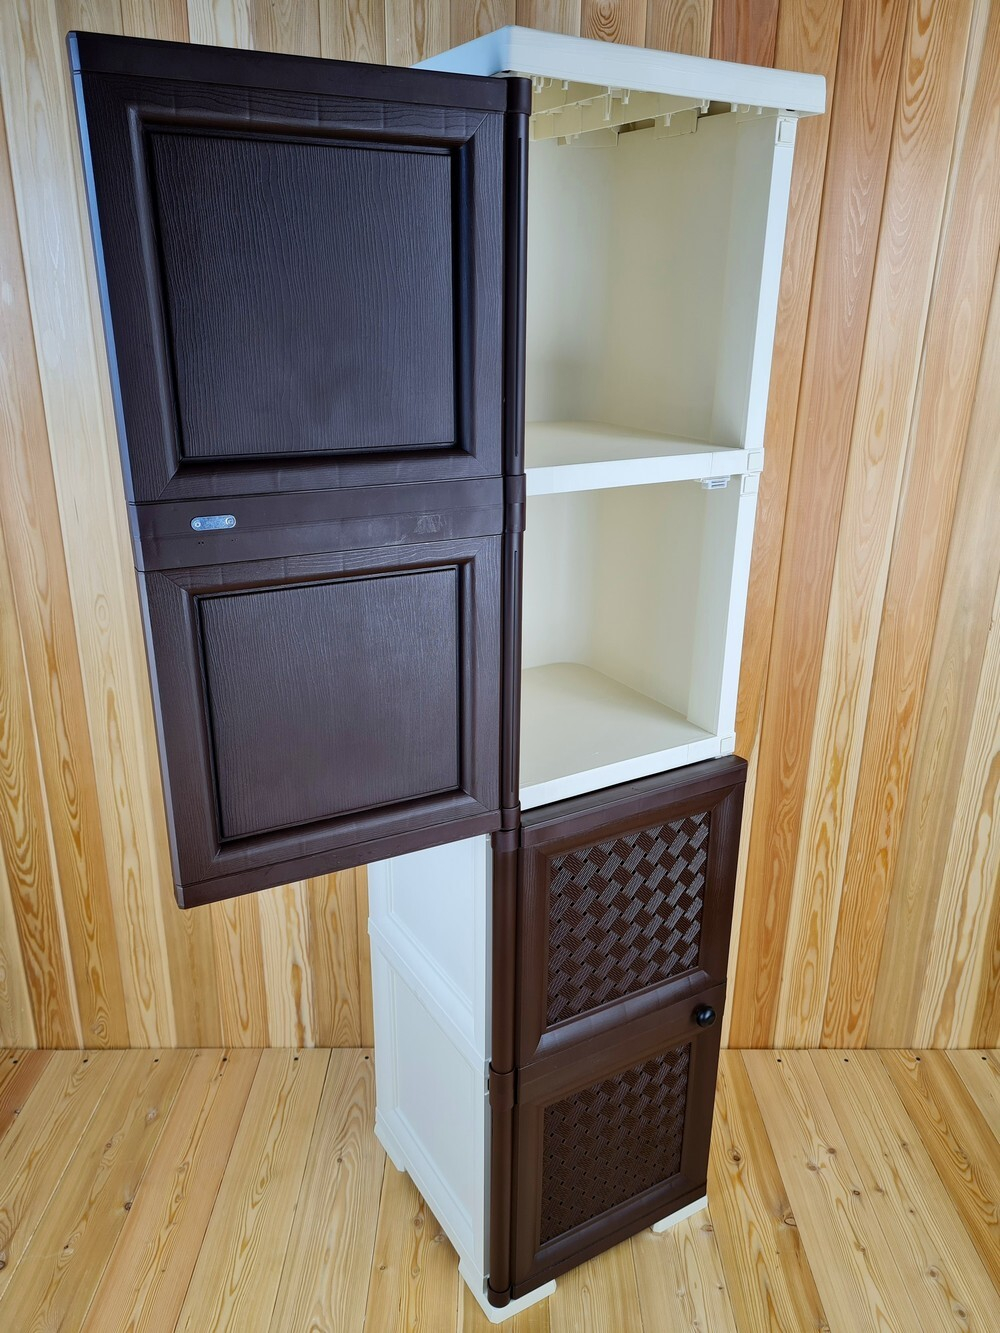 Шкаф высокий, с усиленными рёбрами жёсткости "УЮТ", 40,5х42х161,5 h, 2 дверцы. Цвет: Бежево-коричневый. Арт: Э-046-БД